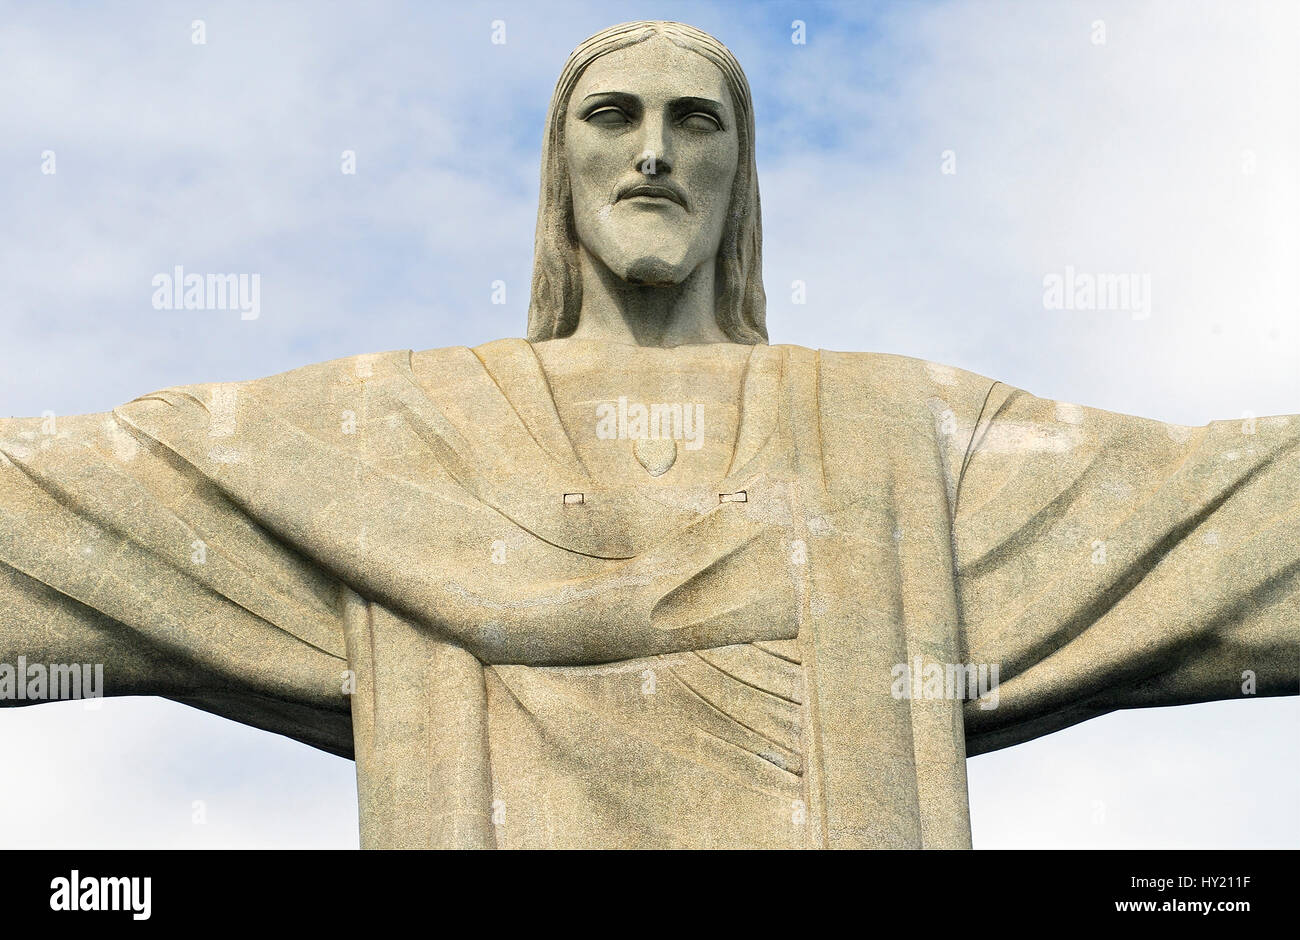 Detail Image of the Corcovado Jesus Statue in Rio de Janeiro, Brazil. Stock Photo